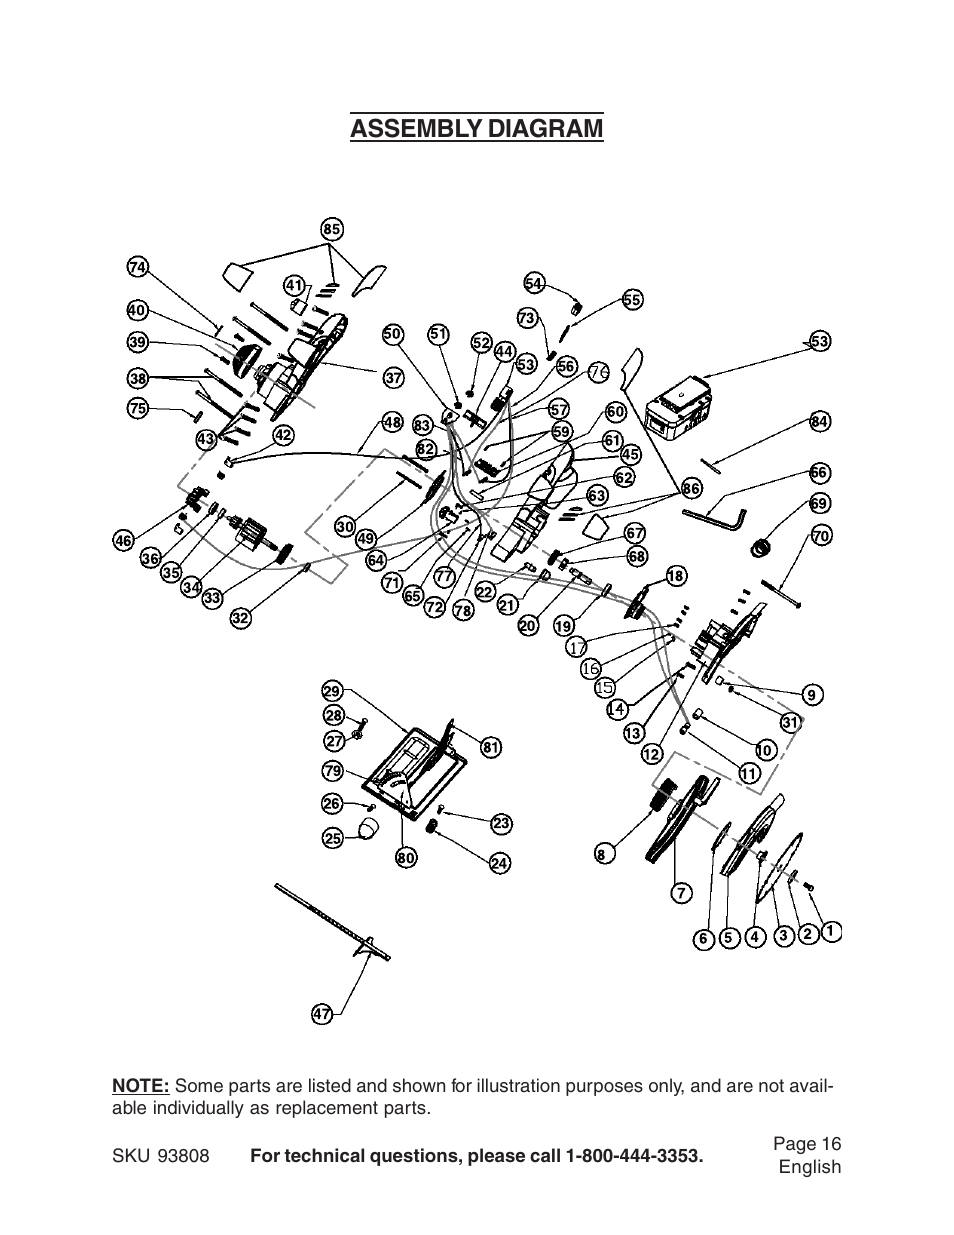 Assembly diagram | Harbor Freight Tools 93808 Manuel d'utilisation | Page 16 / 33